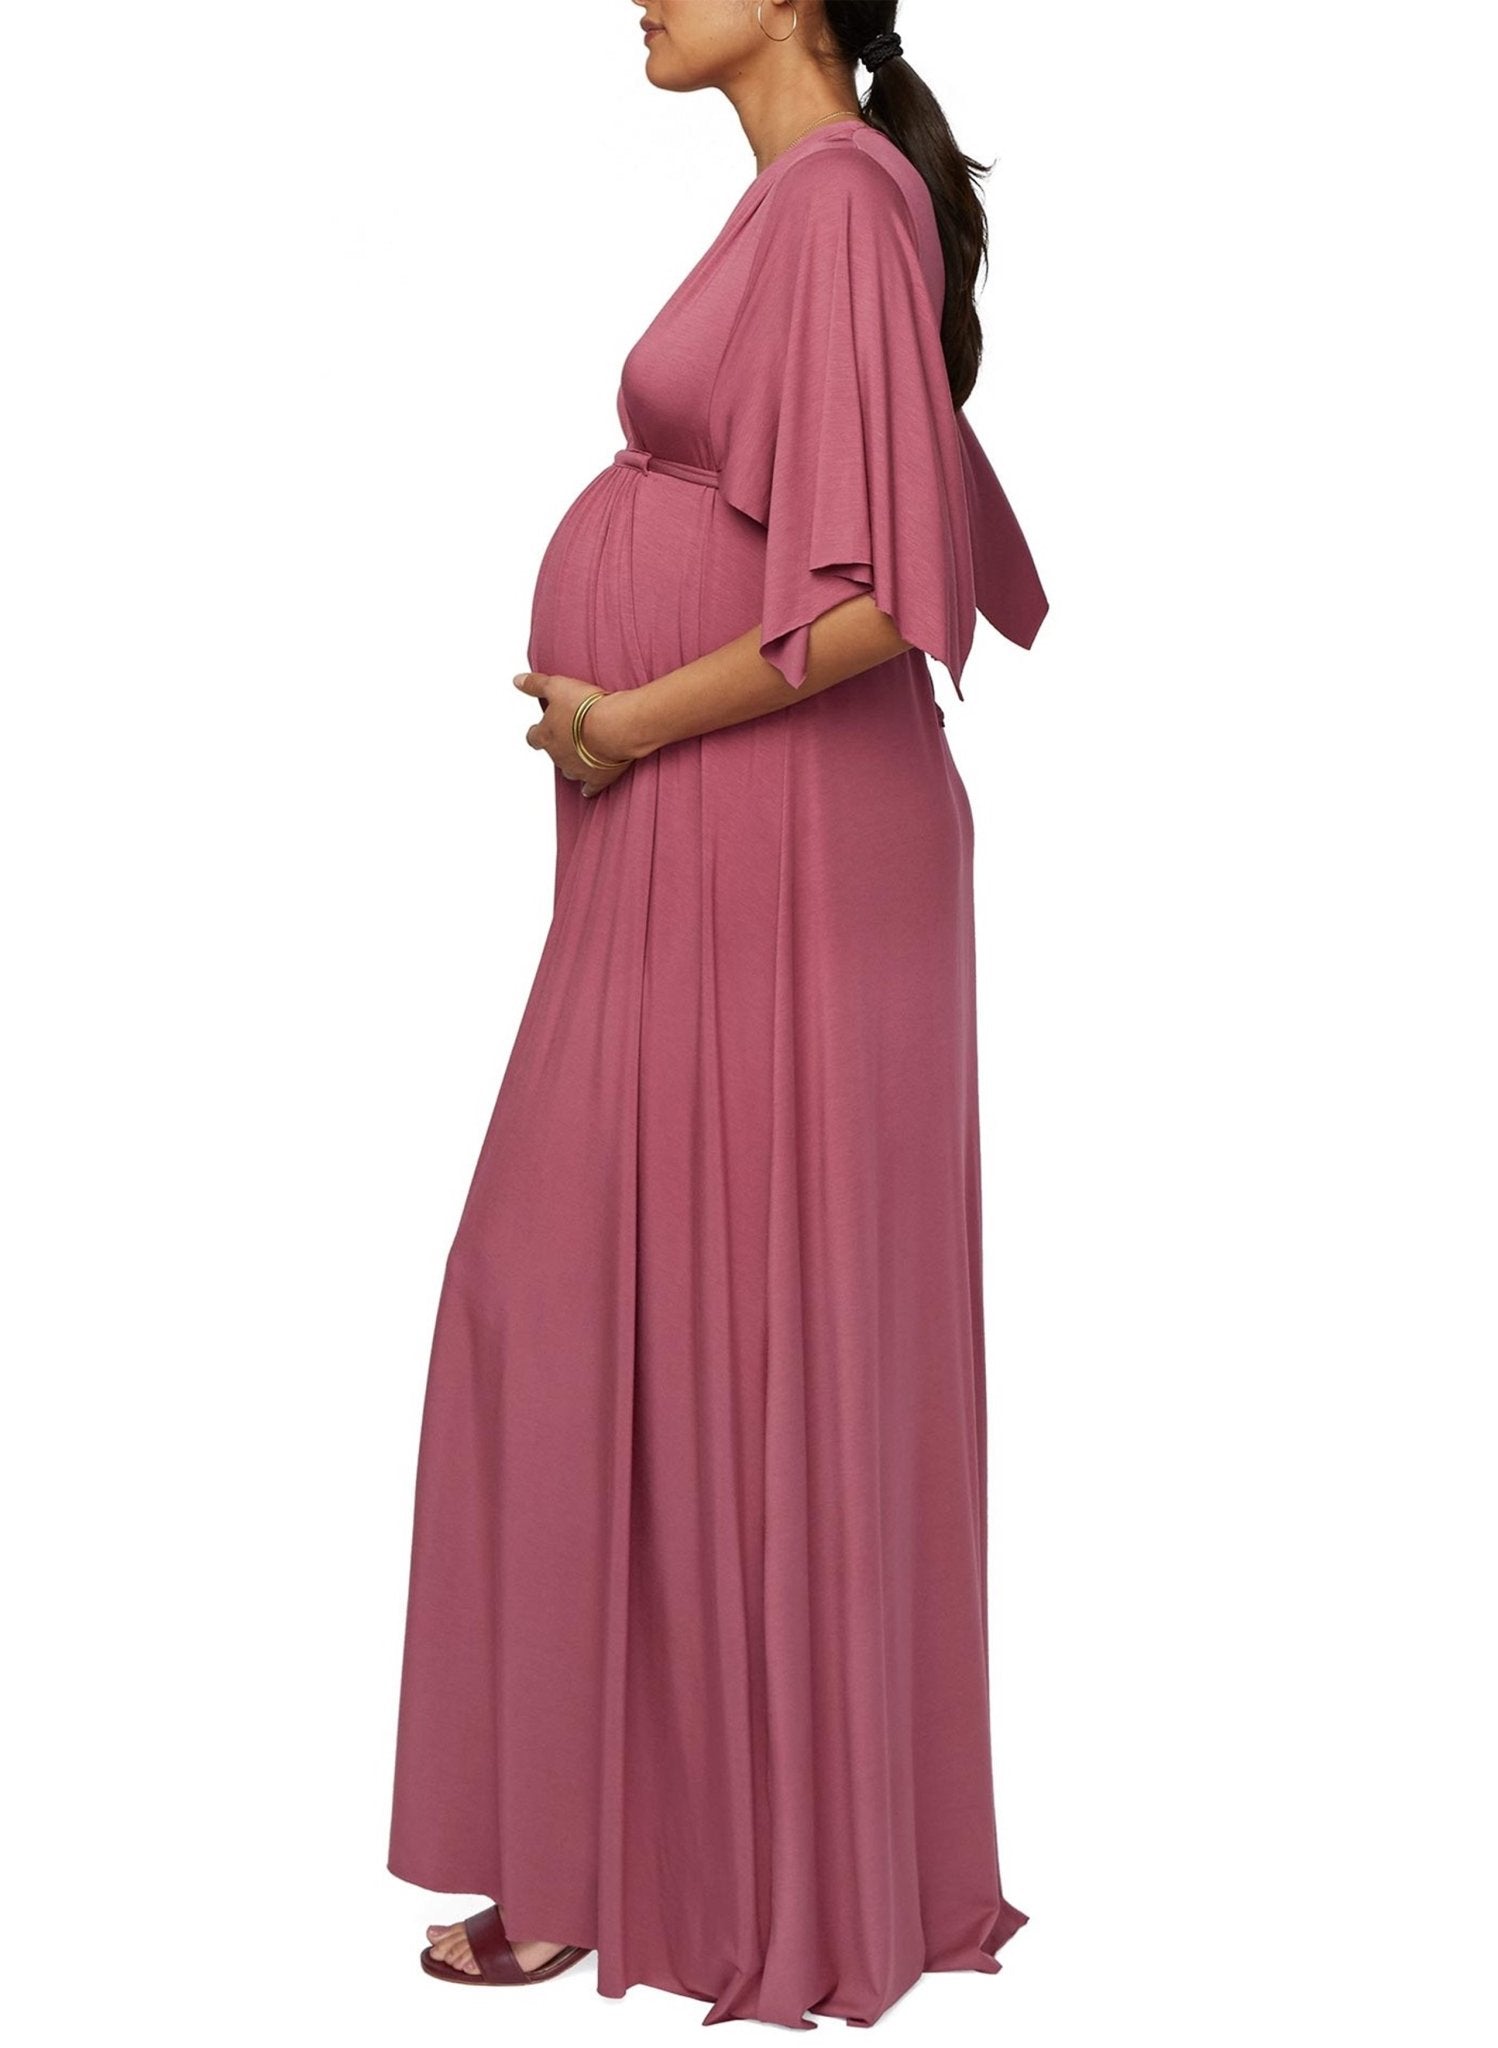 Dahlia Long Maternity Caftan Dress - Mums and Bumps